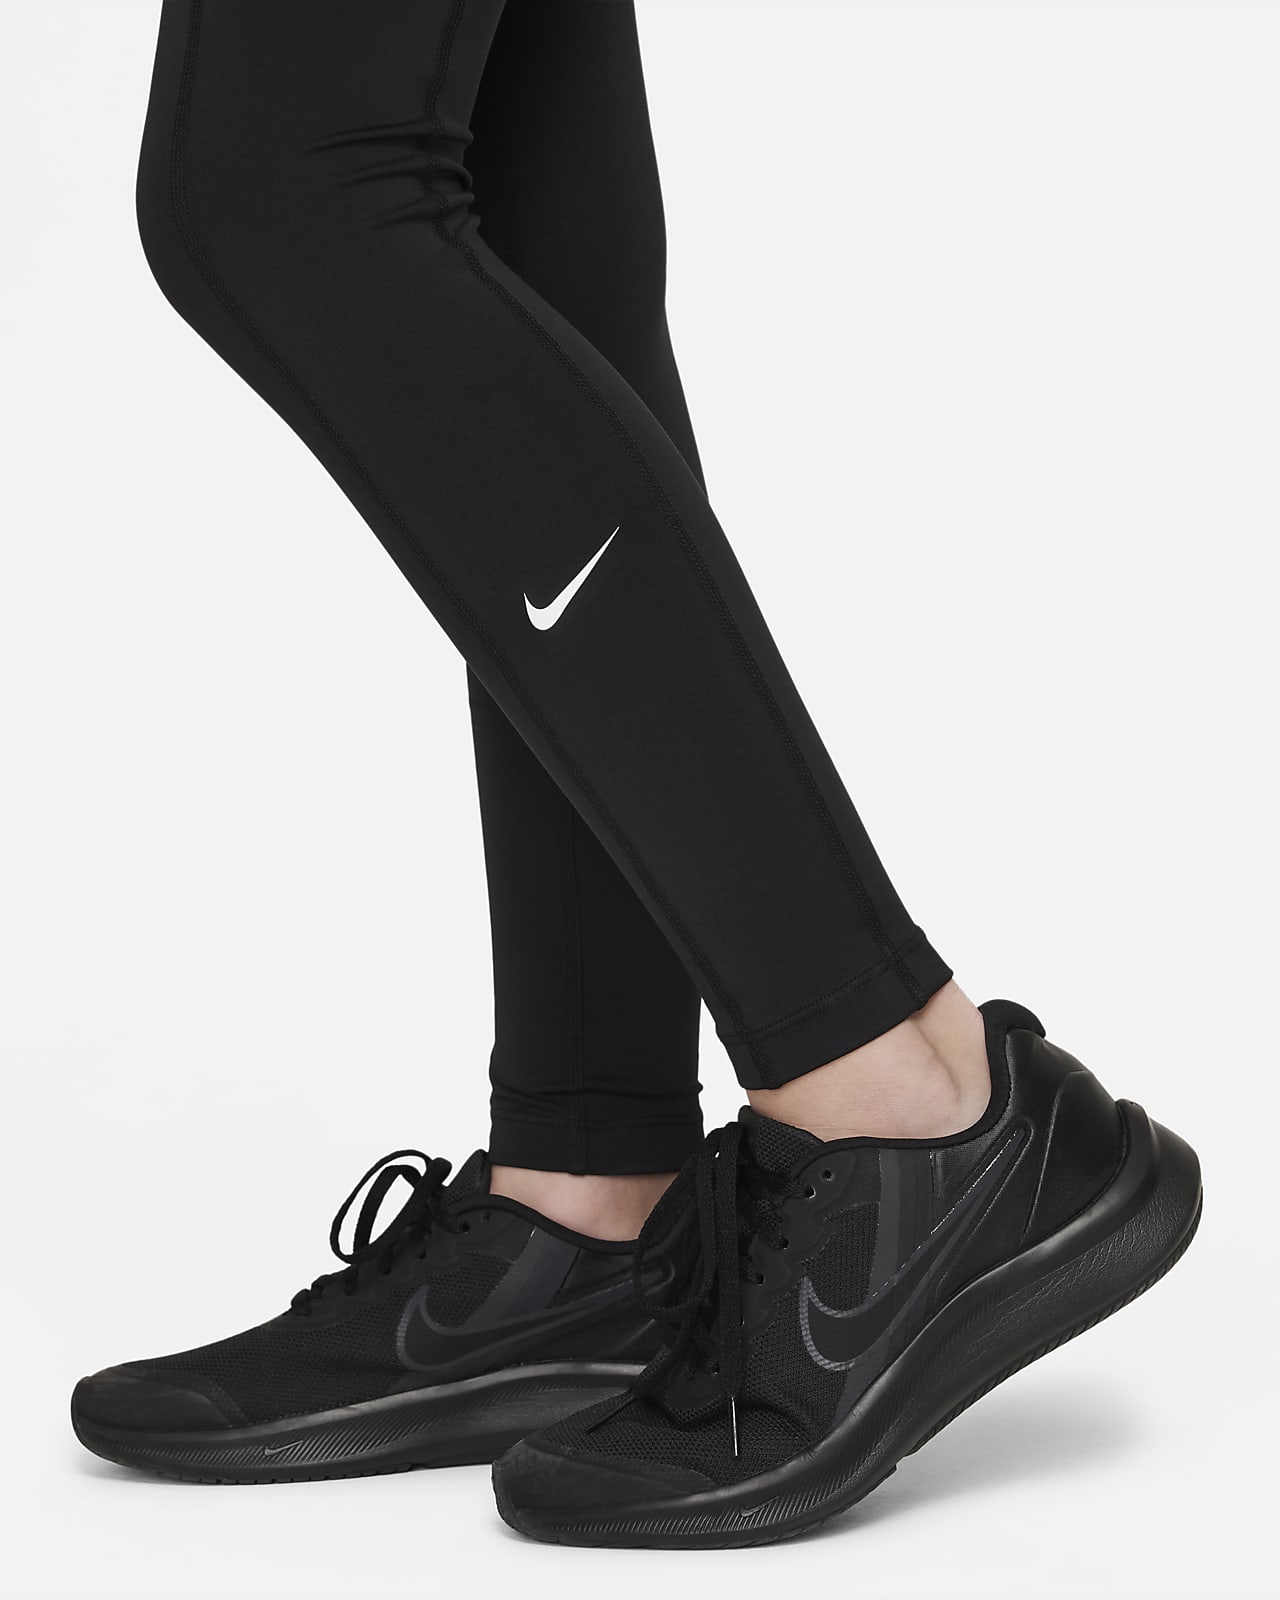 Nike Sportswear Essentials Leggings Younger Kids' Leggings. Nike LU